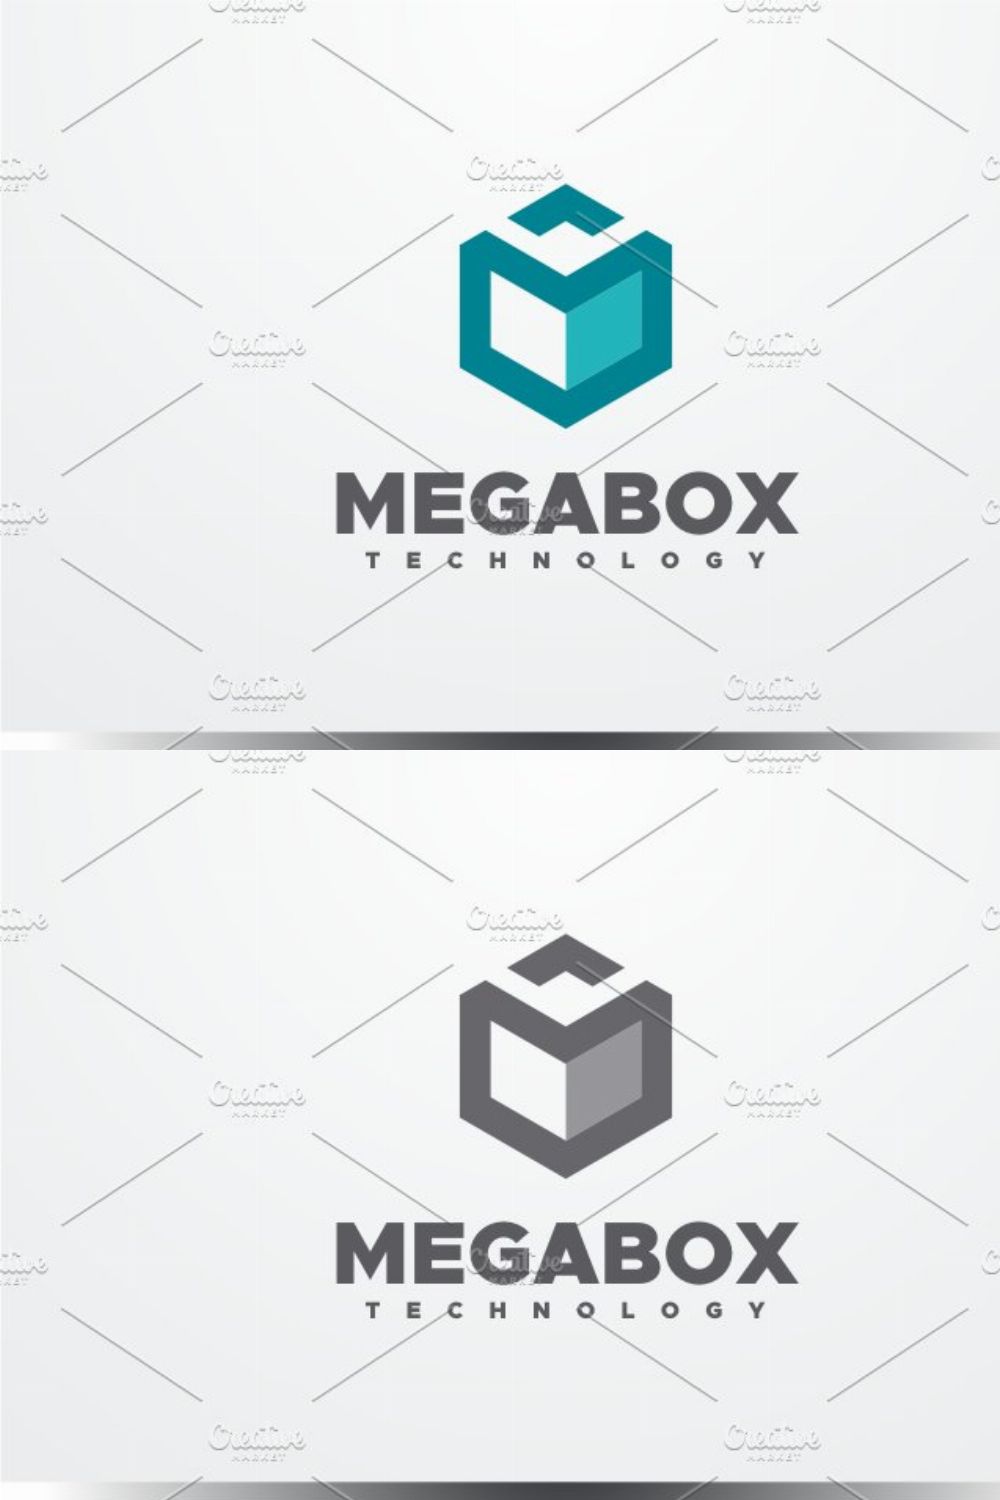 Megabox Logo pinterest preview image.